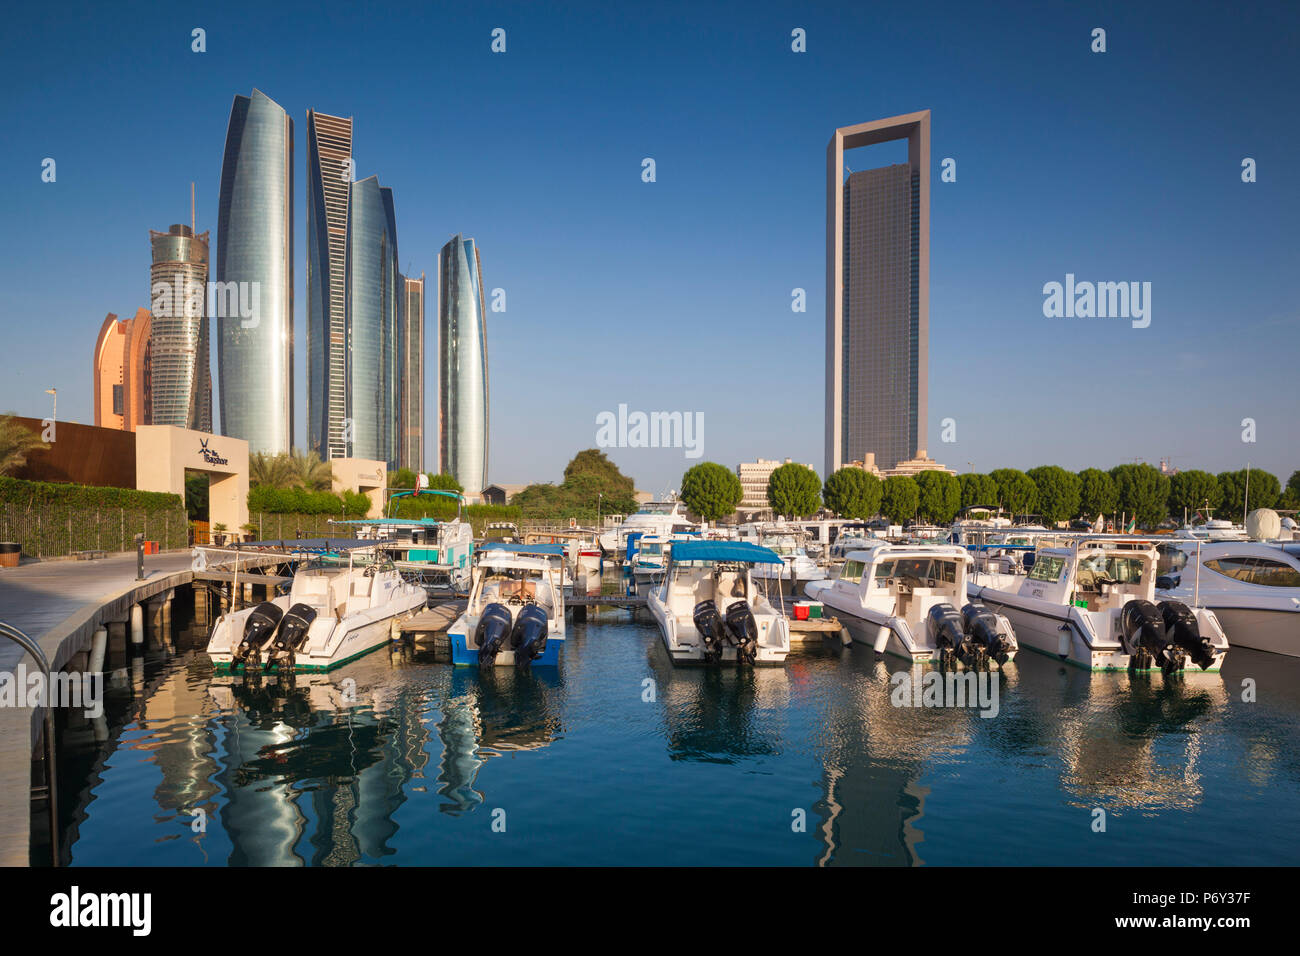 UAE, Abu Dhabi, Etihad Towers and ADNOC Tower Stock Photo